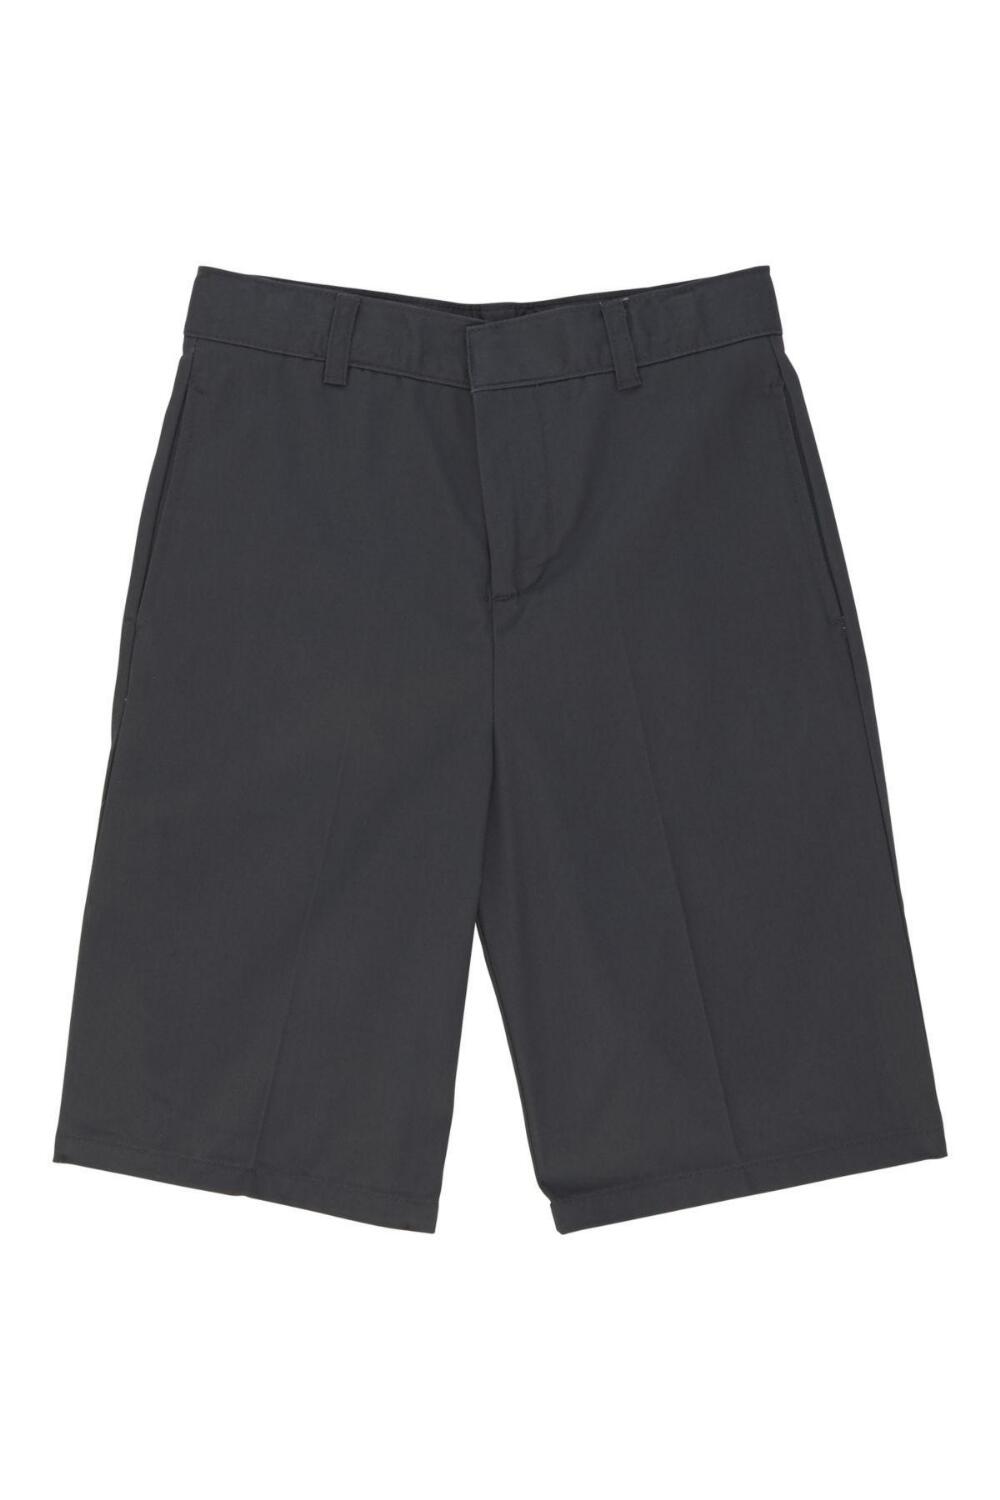 Boys Flat Front Adjustable Waist Uniform Shorts (Boy's Short Color: Grey - SWCS, Boy's Short Size: Size 4)